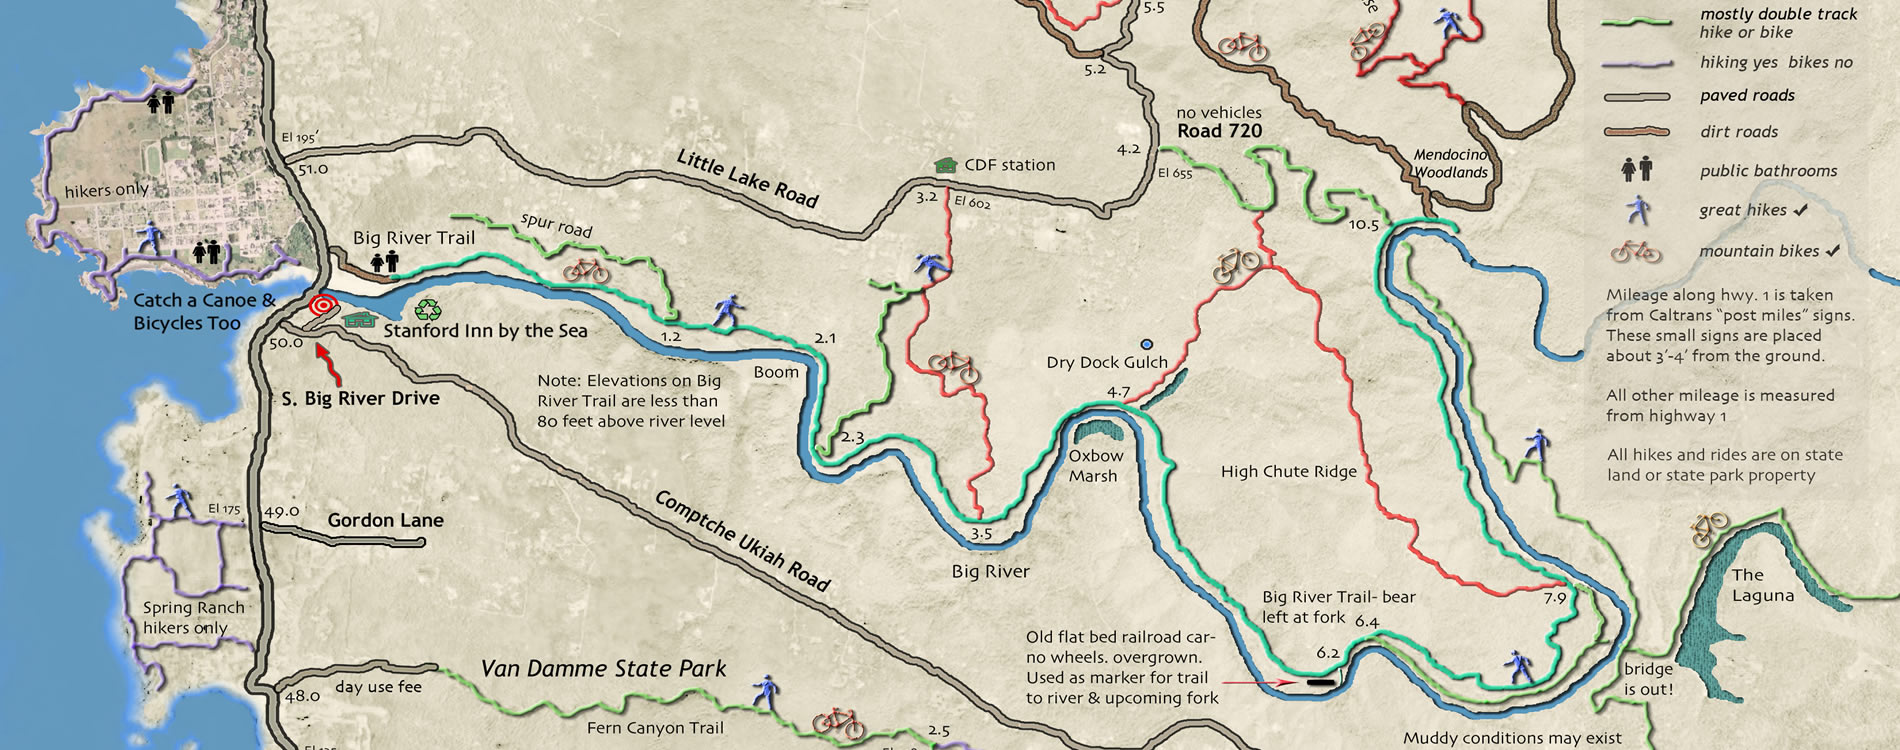 mendocino bike and hike map